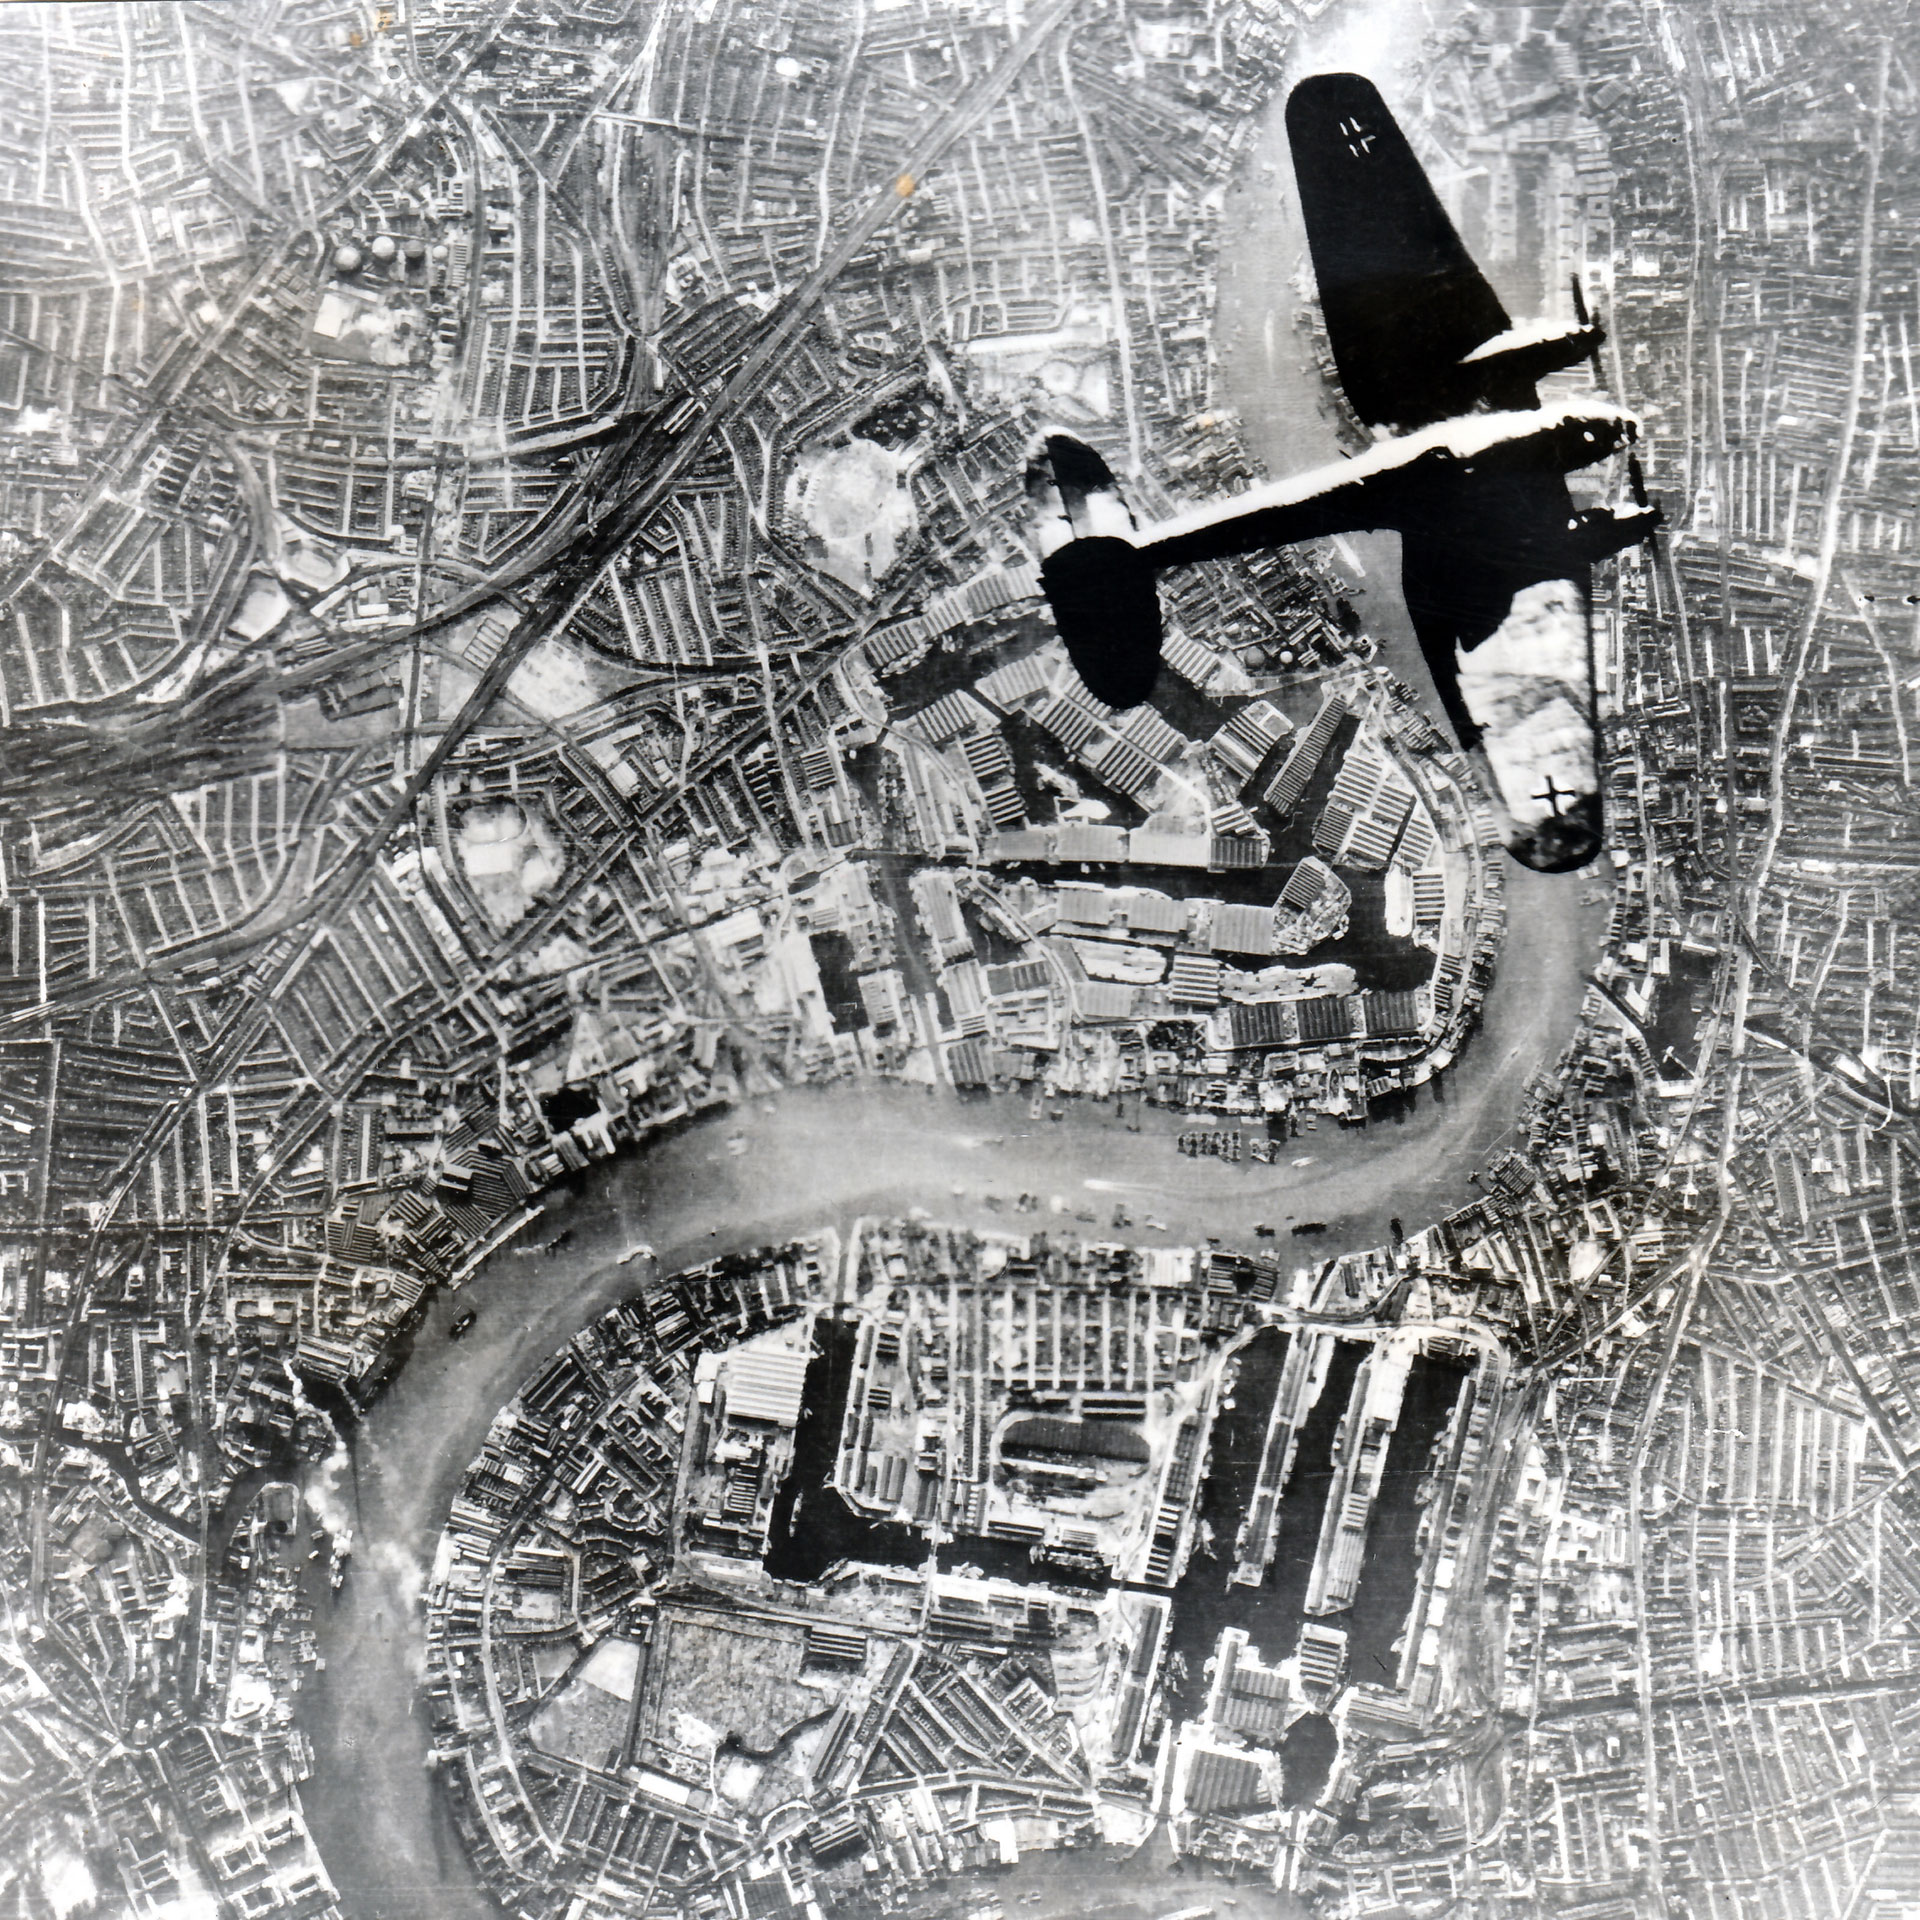 Luftwaffe over London:  A German Heinkel He 111 bomber over the British capitol. NARA